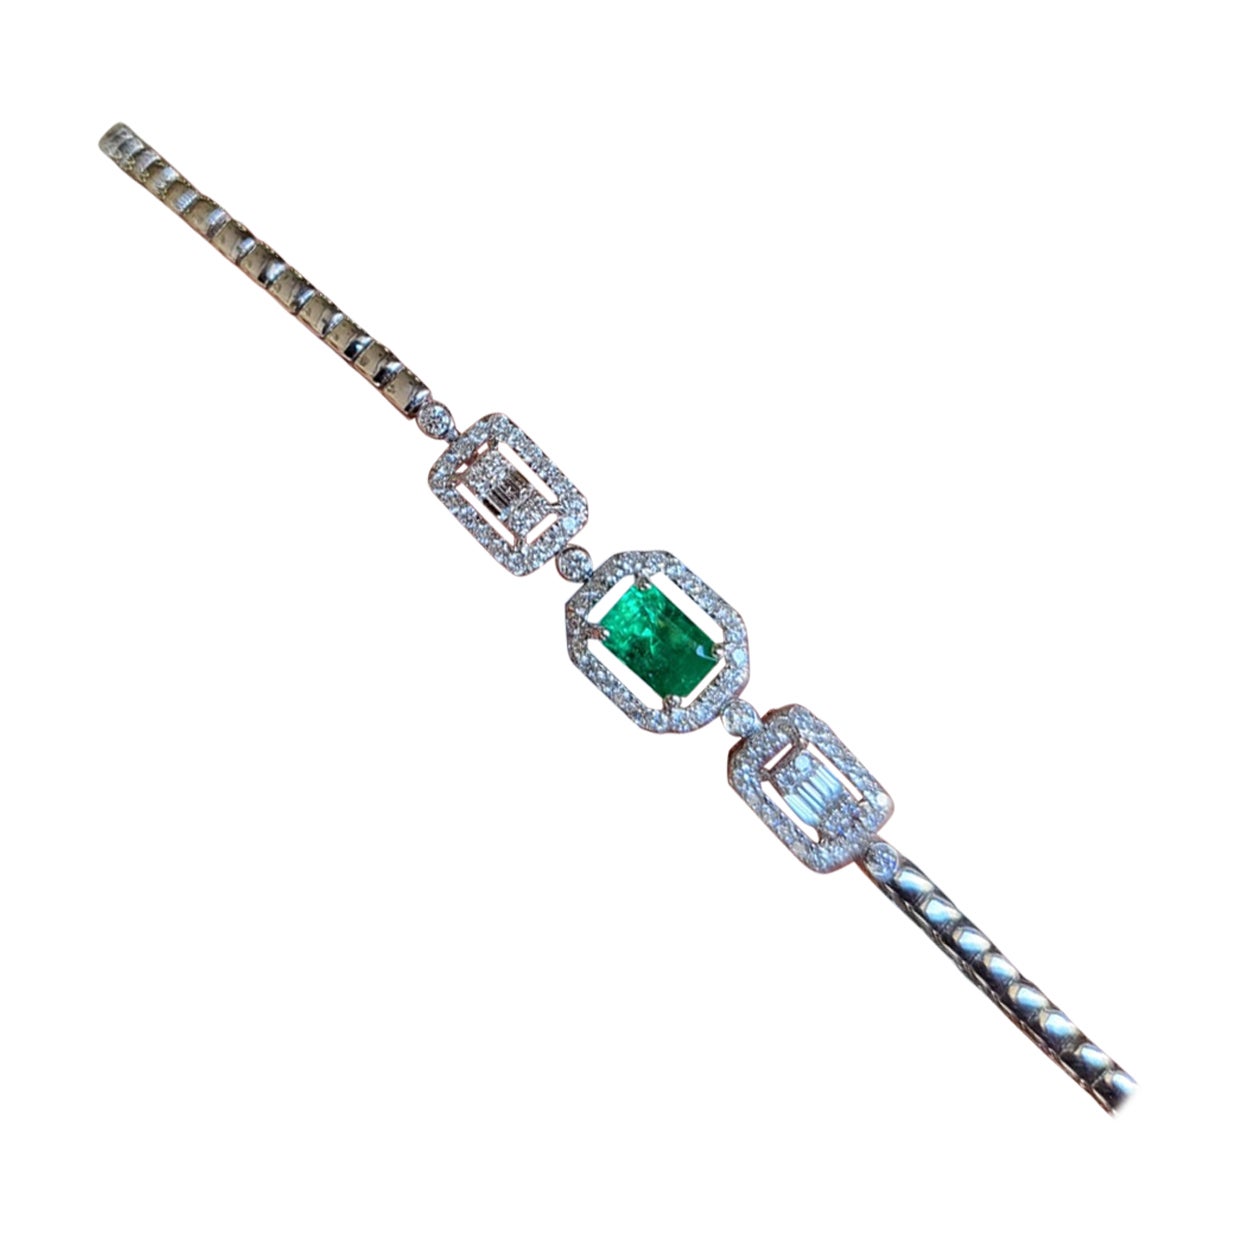 Set in 18K White Gold, 0.90 Carats, Zambian Emerald & Diamonds Chain Bracelet